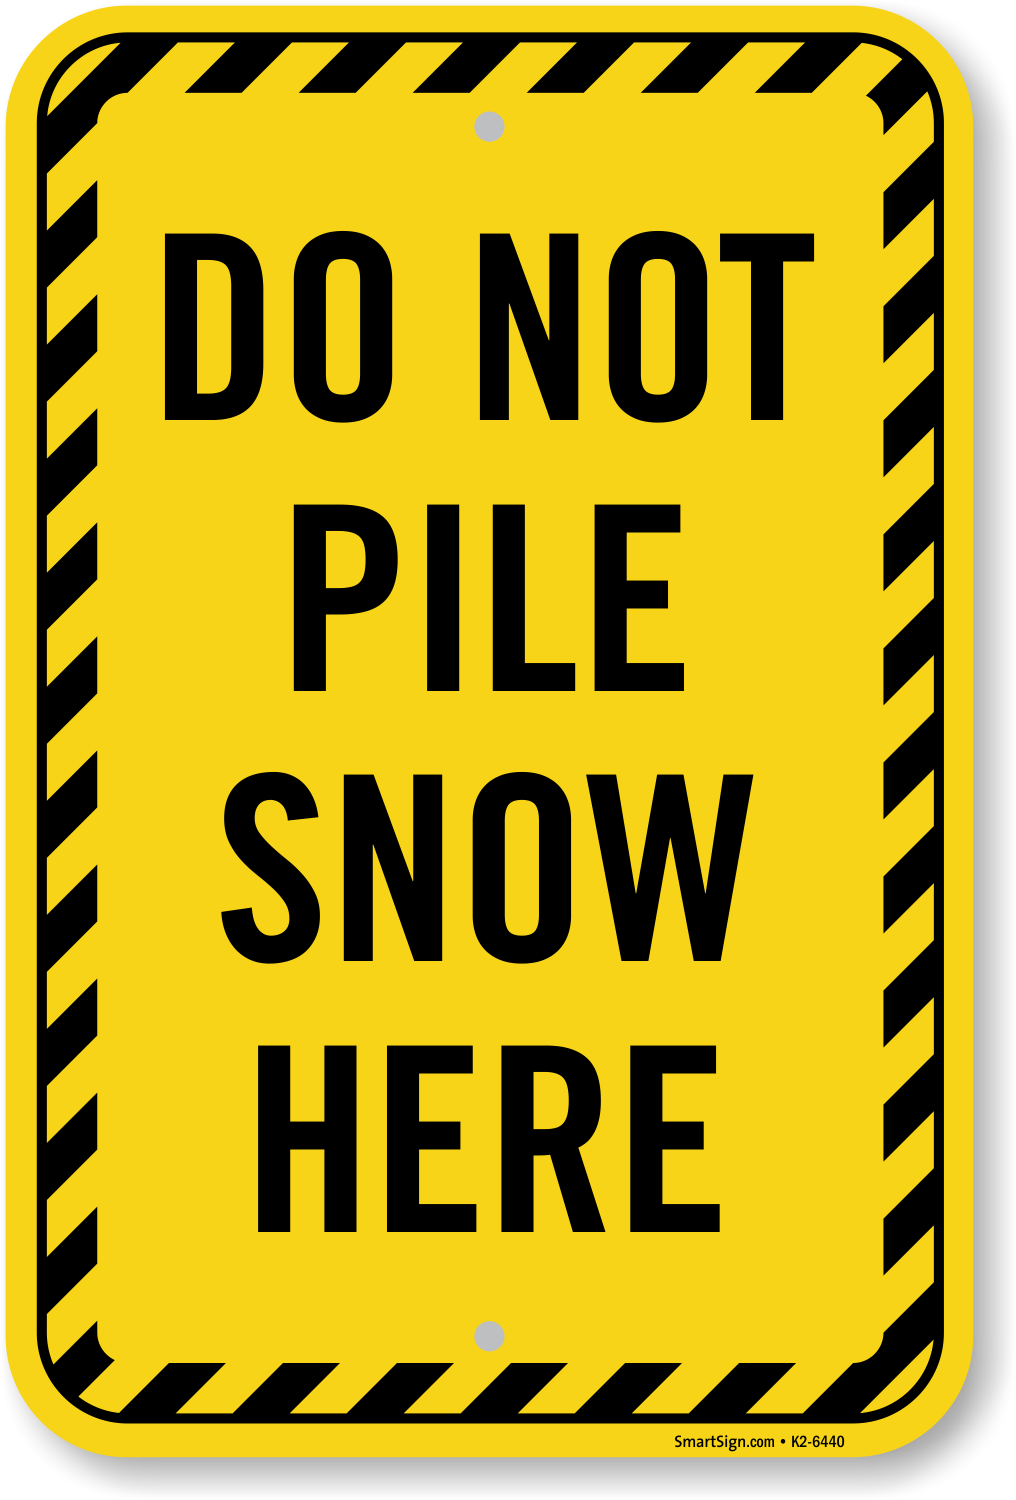 Do Not Pile Snow Here Sign, SKU: K2-6440